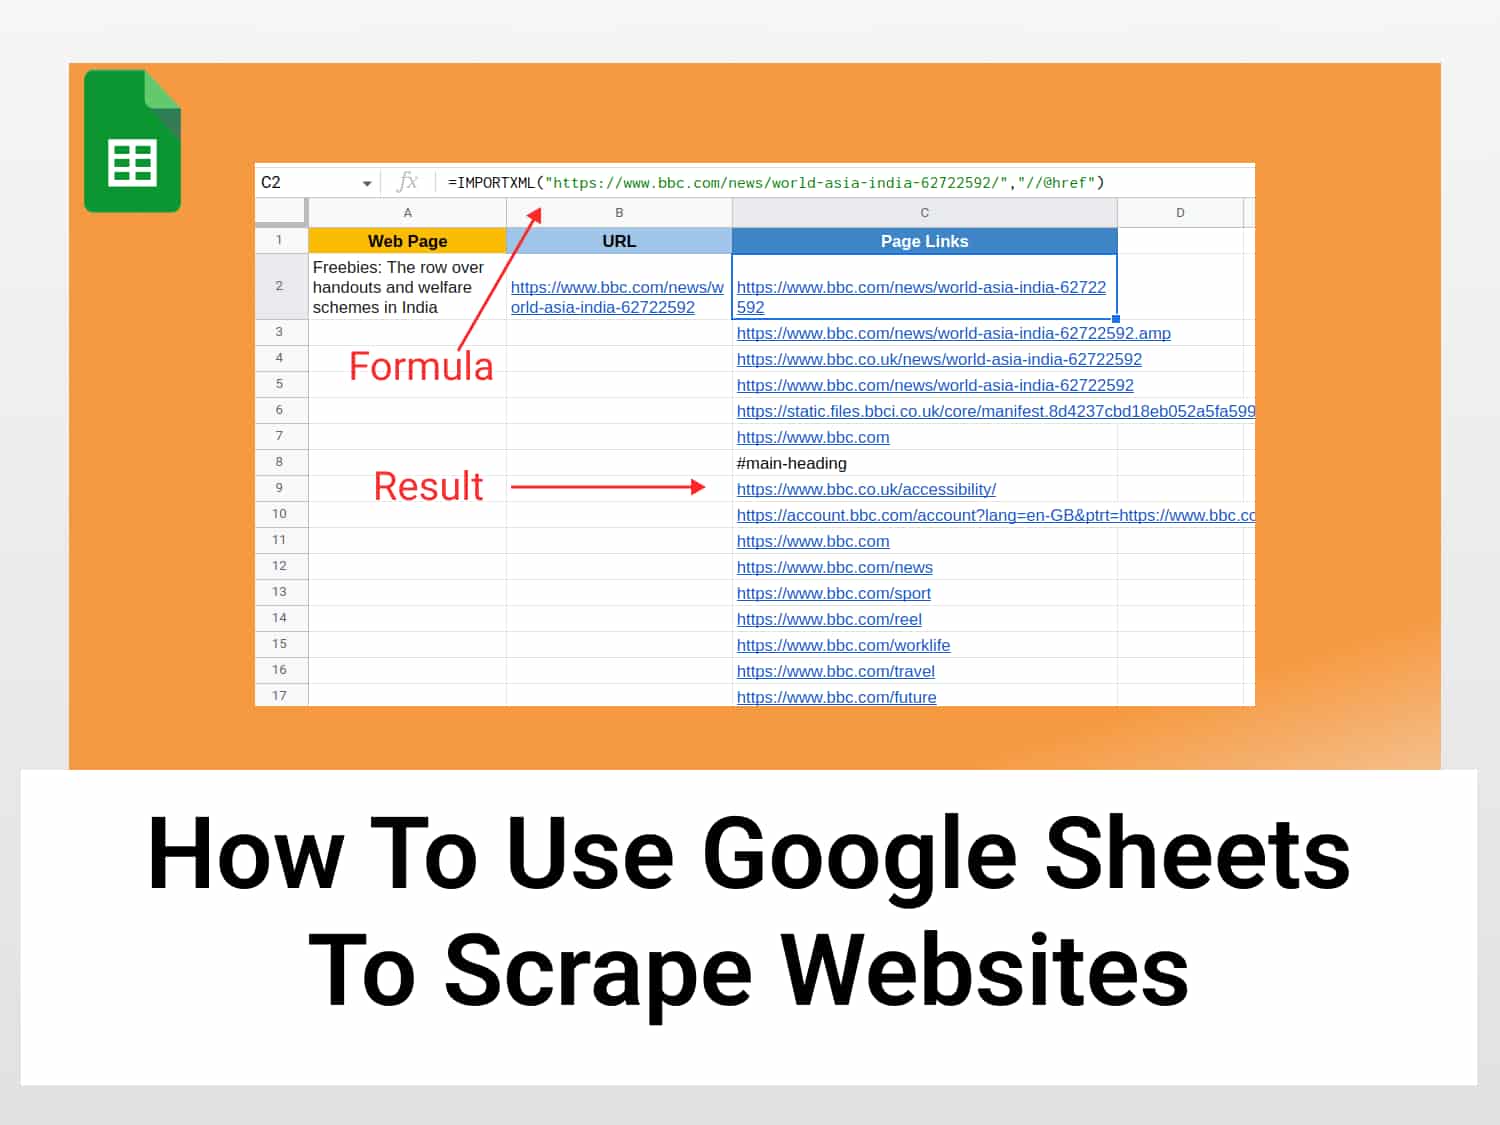 How to scrape websites using Google Sheets